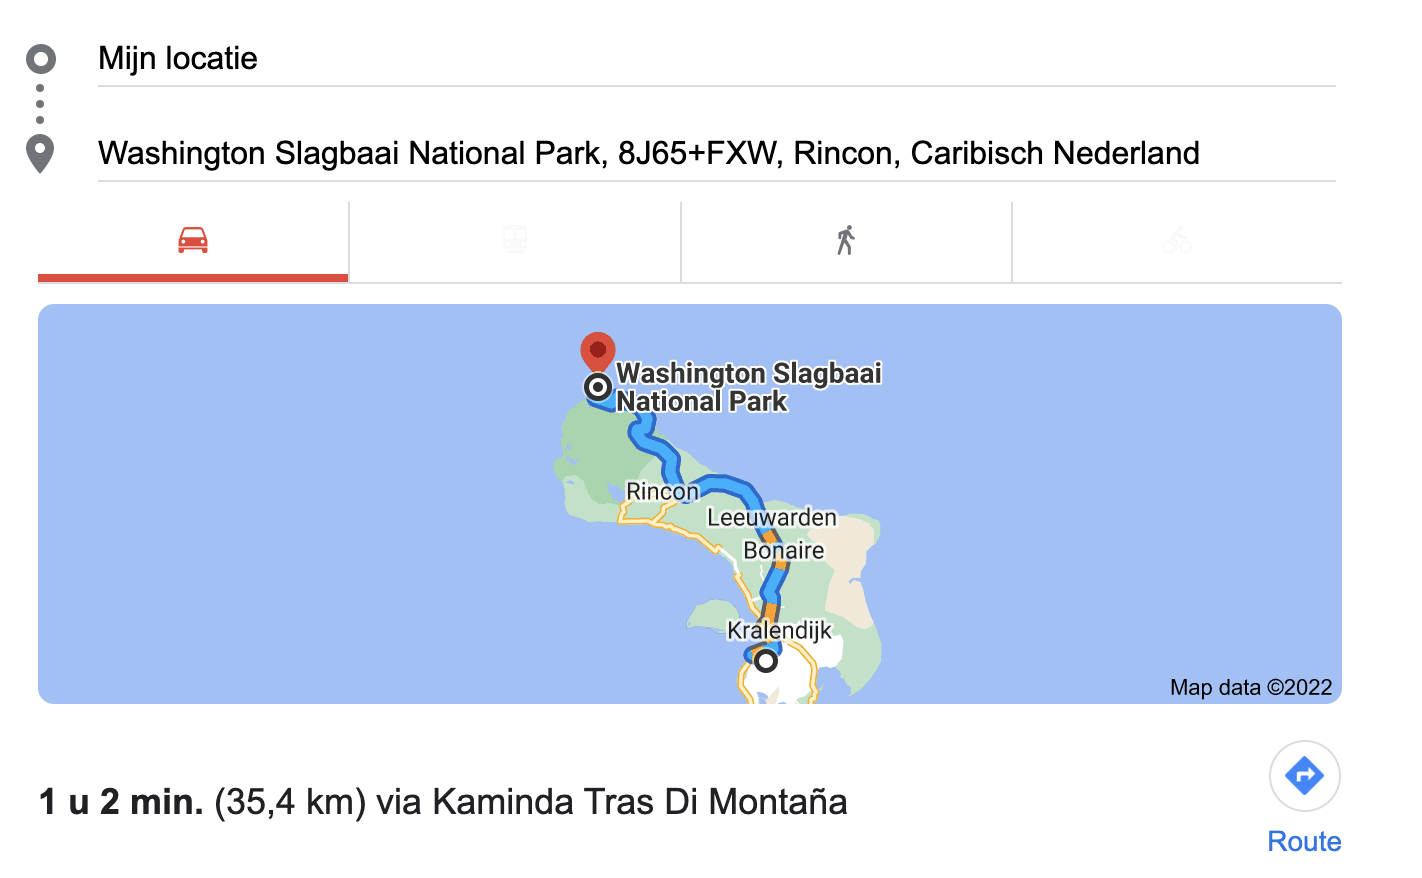 The route desription to drive to the Washington Slagbaai National Park on Bonaire